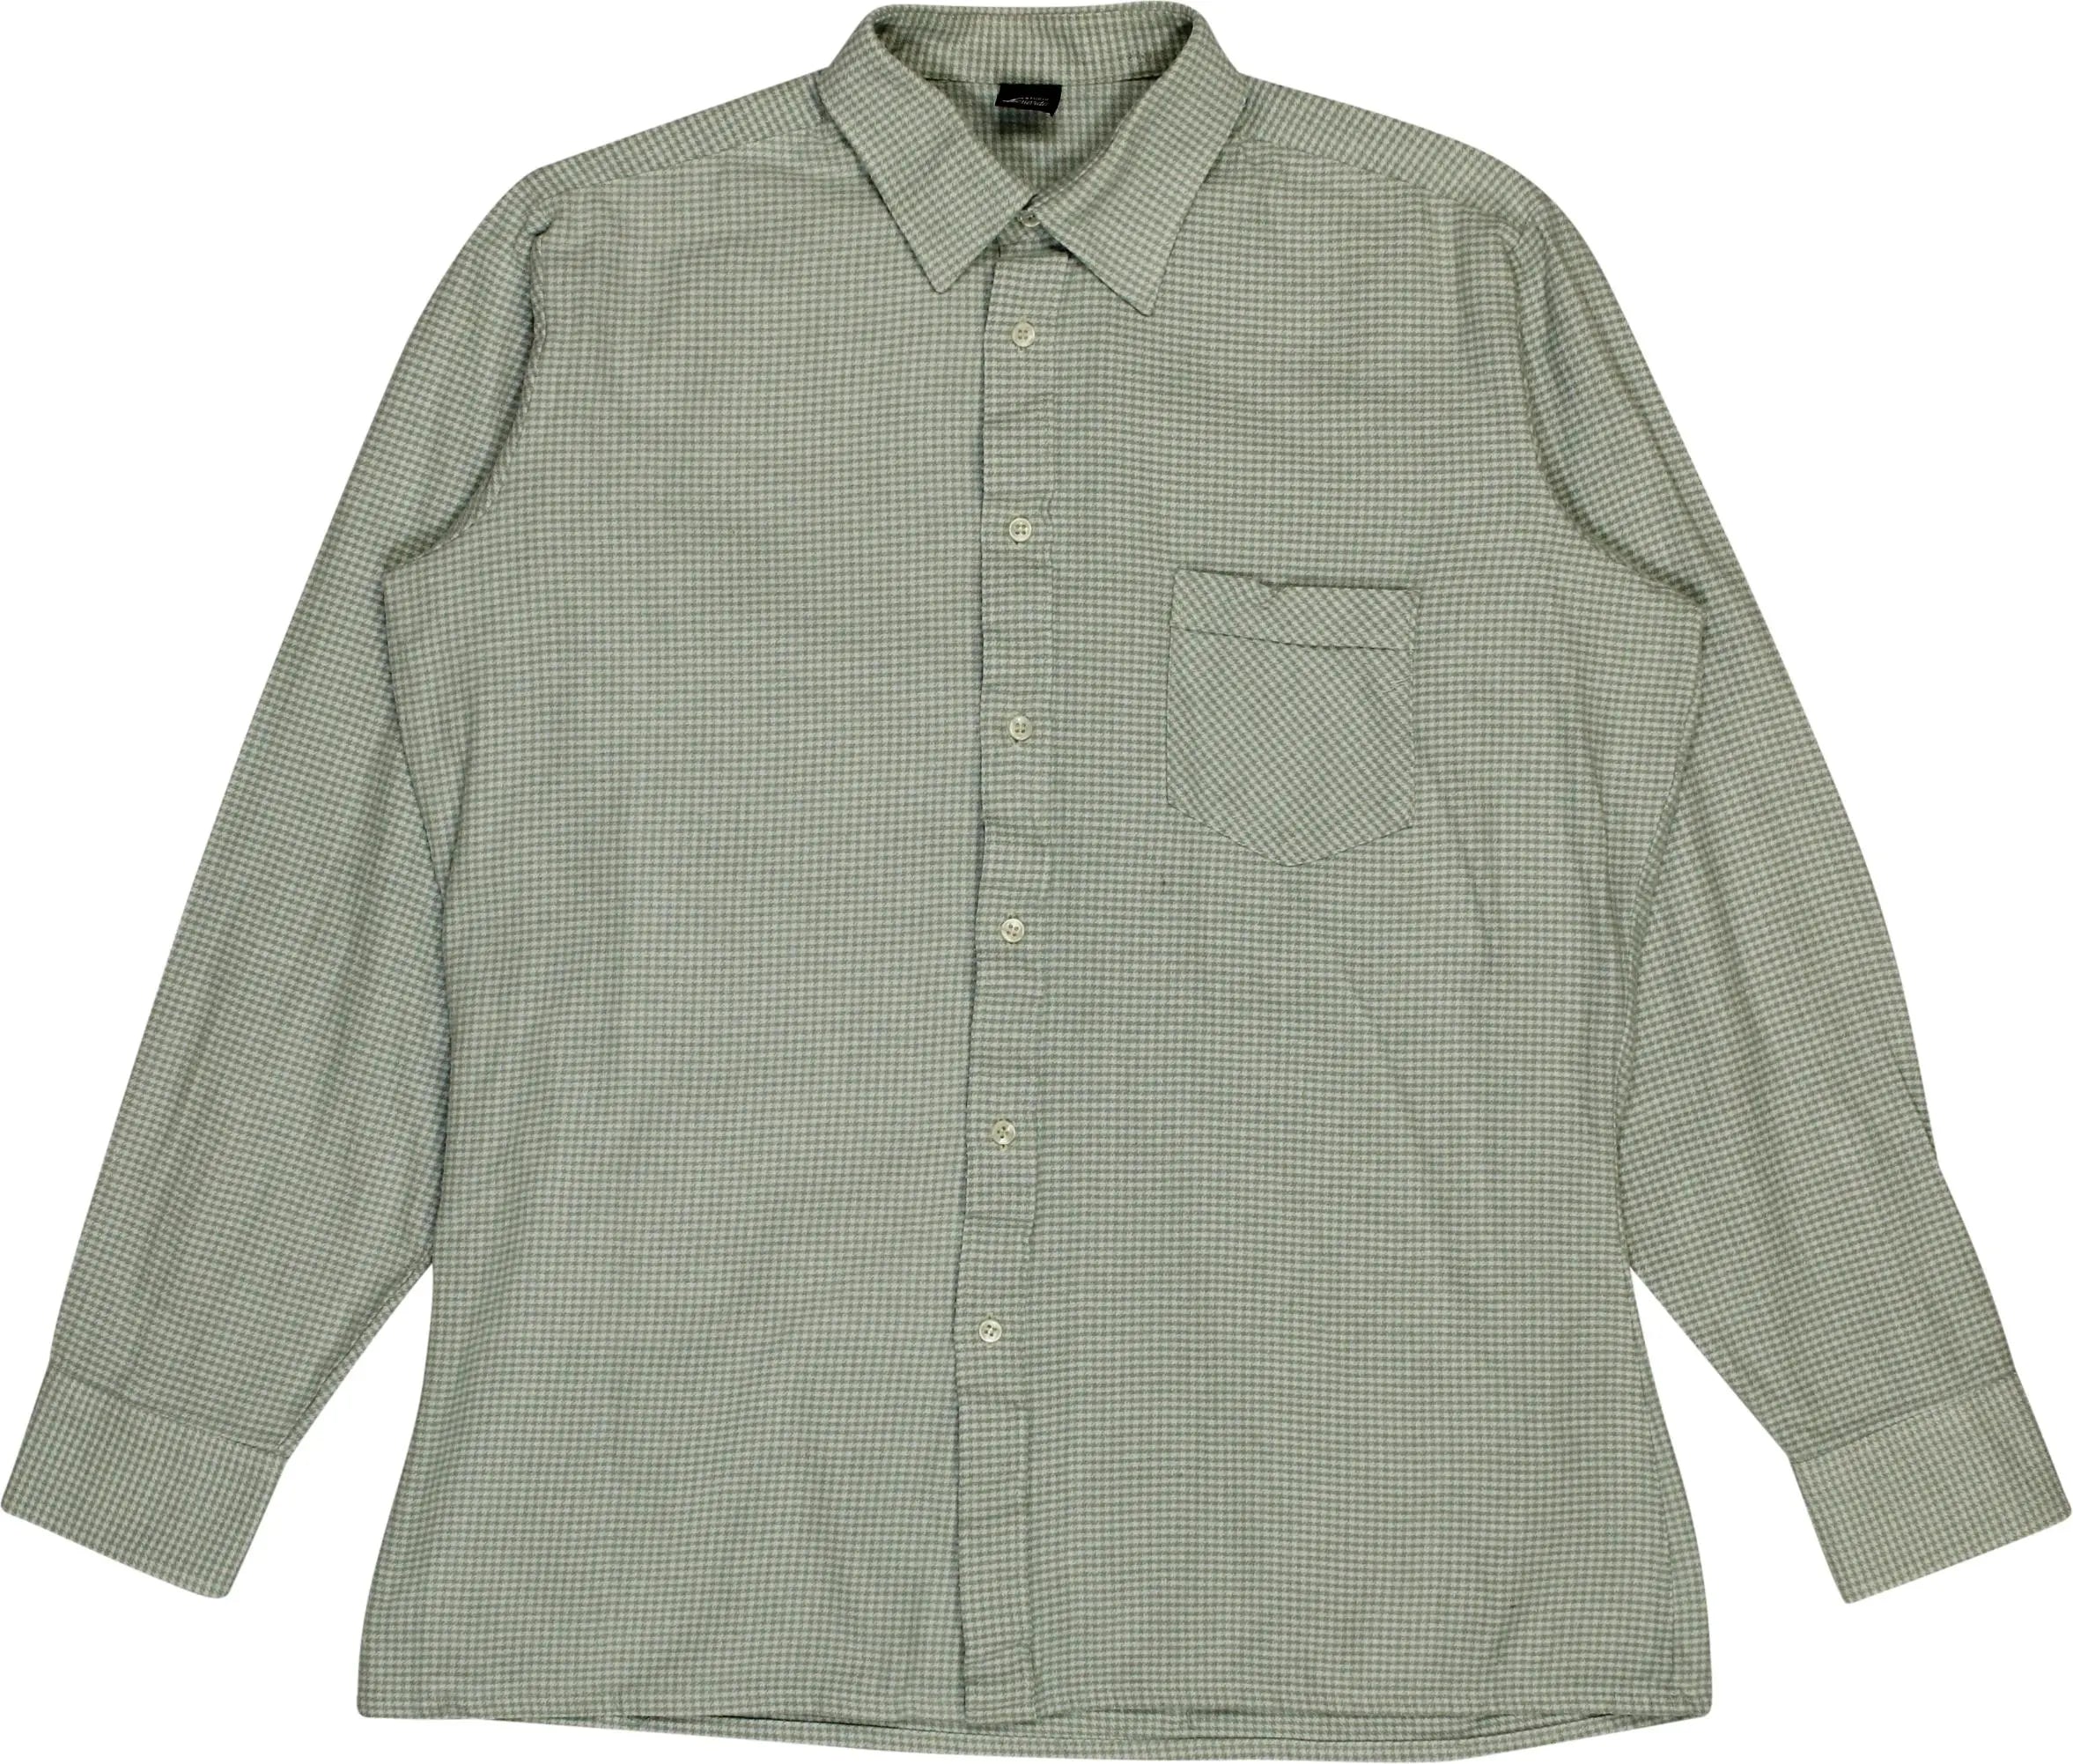 Studio Leonardo - 70s Checkered Shirt- ThriftTale.com - Vintage and second handclothing